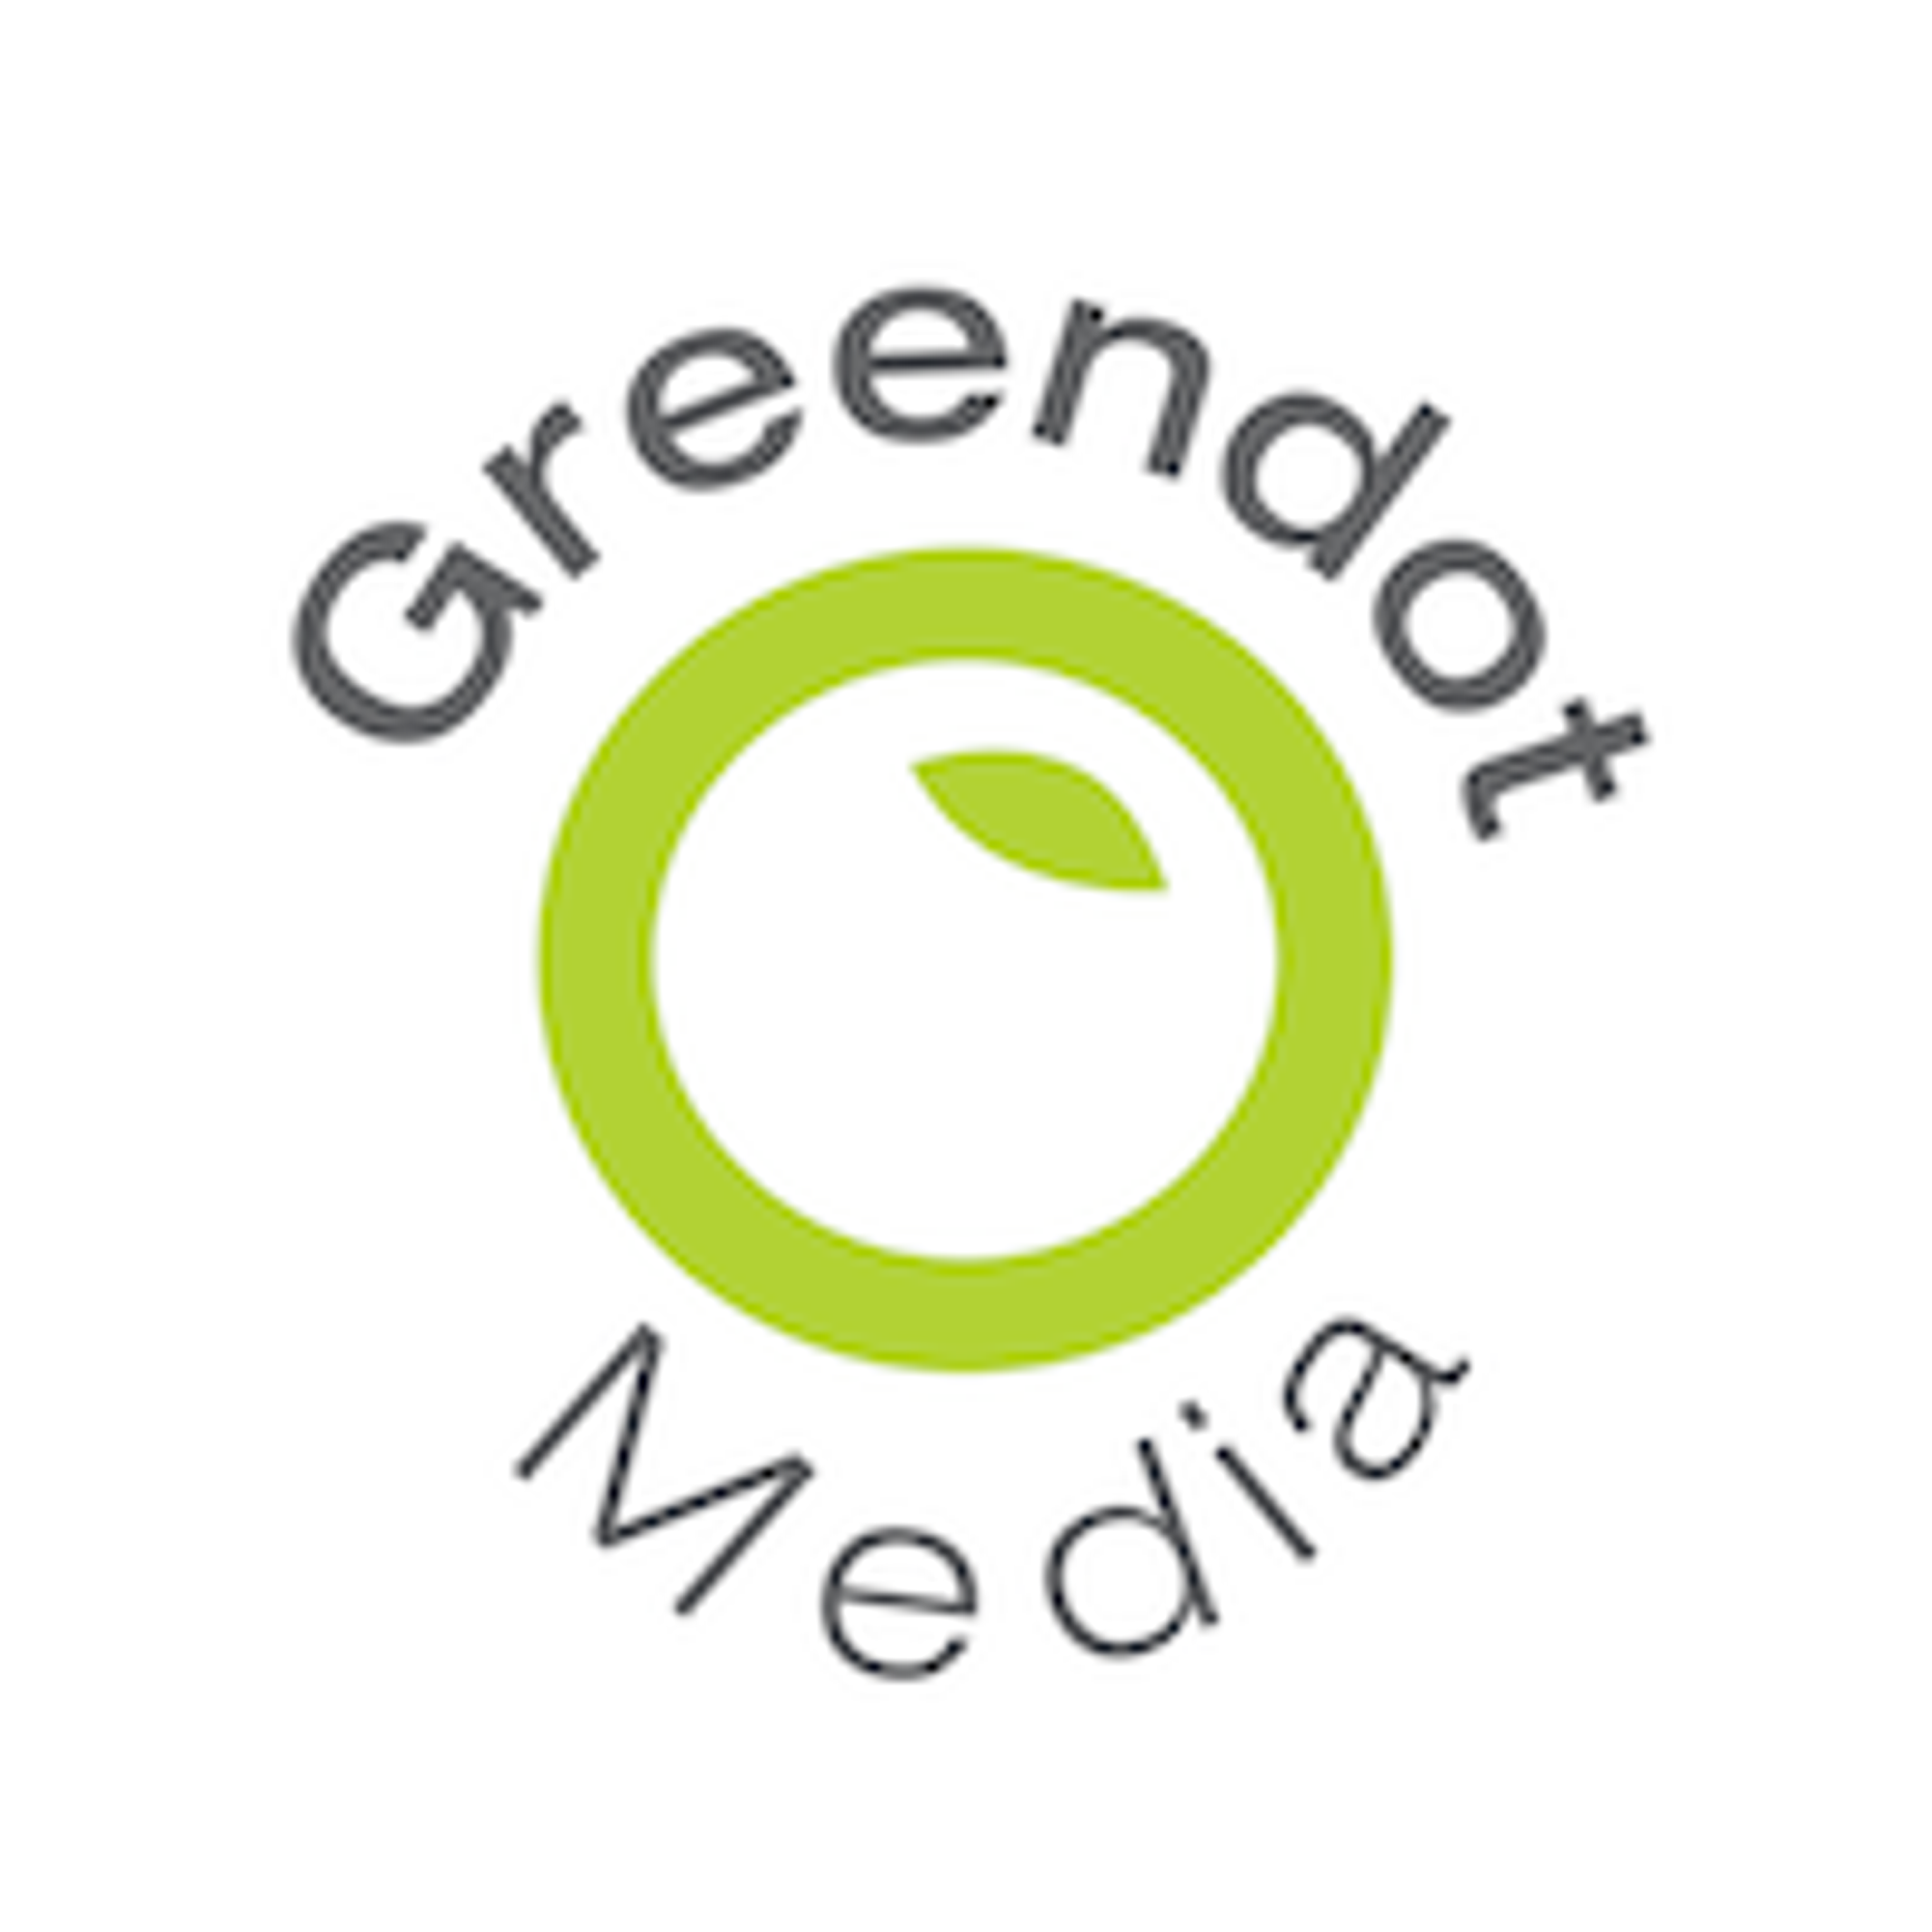 Privacy Policy of Greendot Media